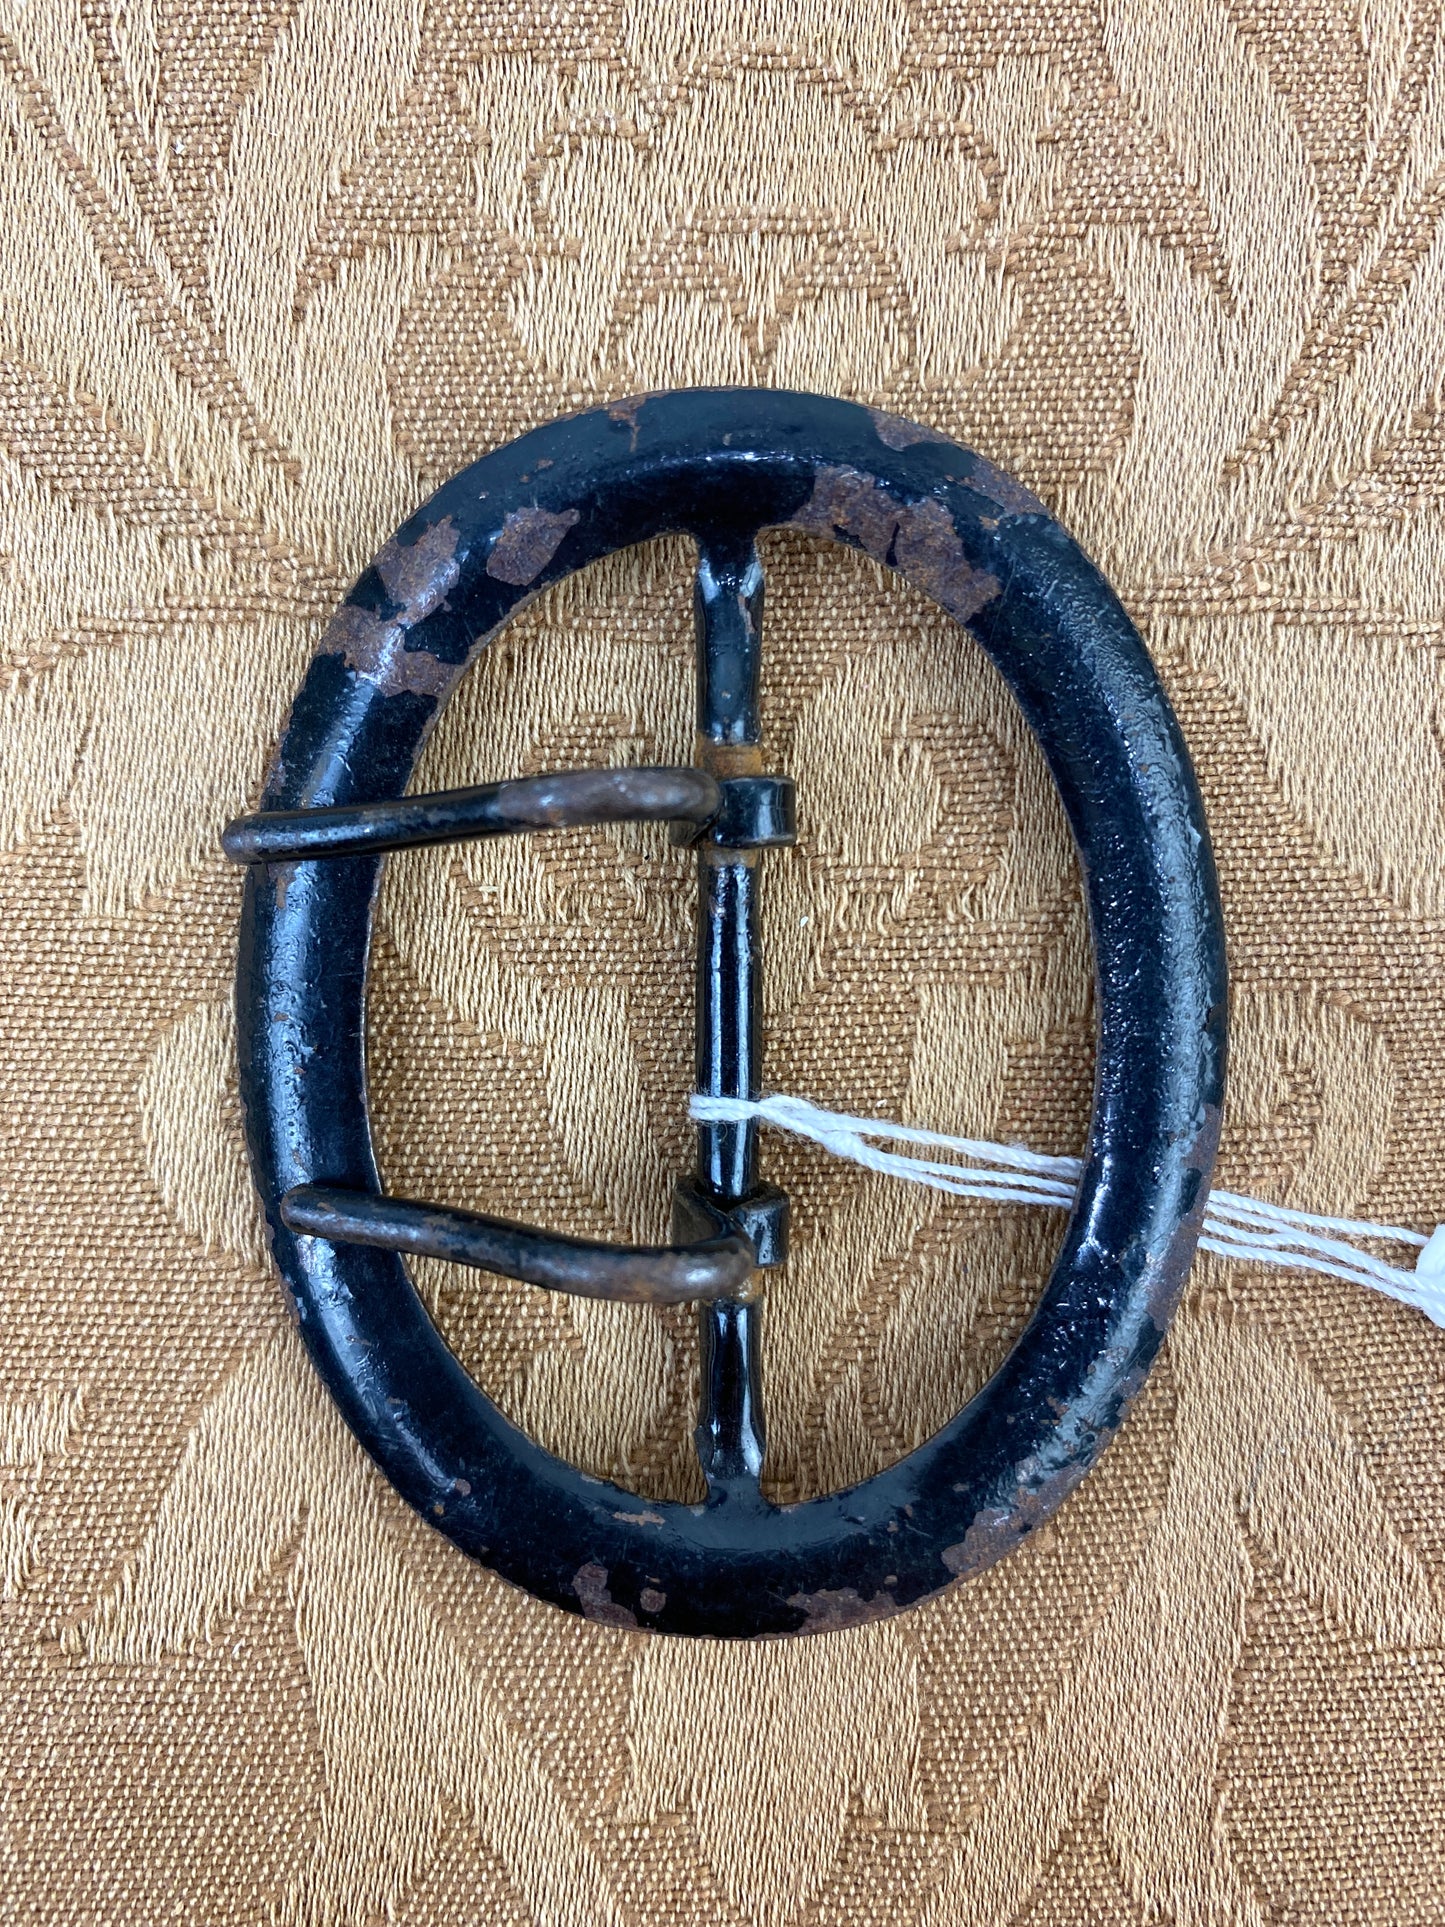 Antique Victorian Black Metal Oval Belt Buckle, 2 Prongs